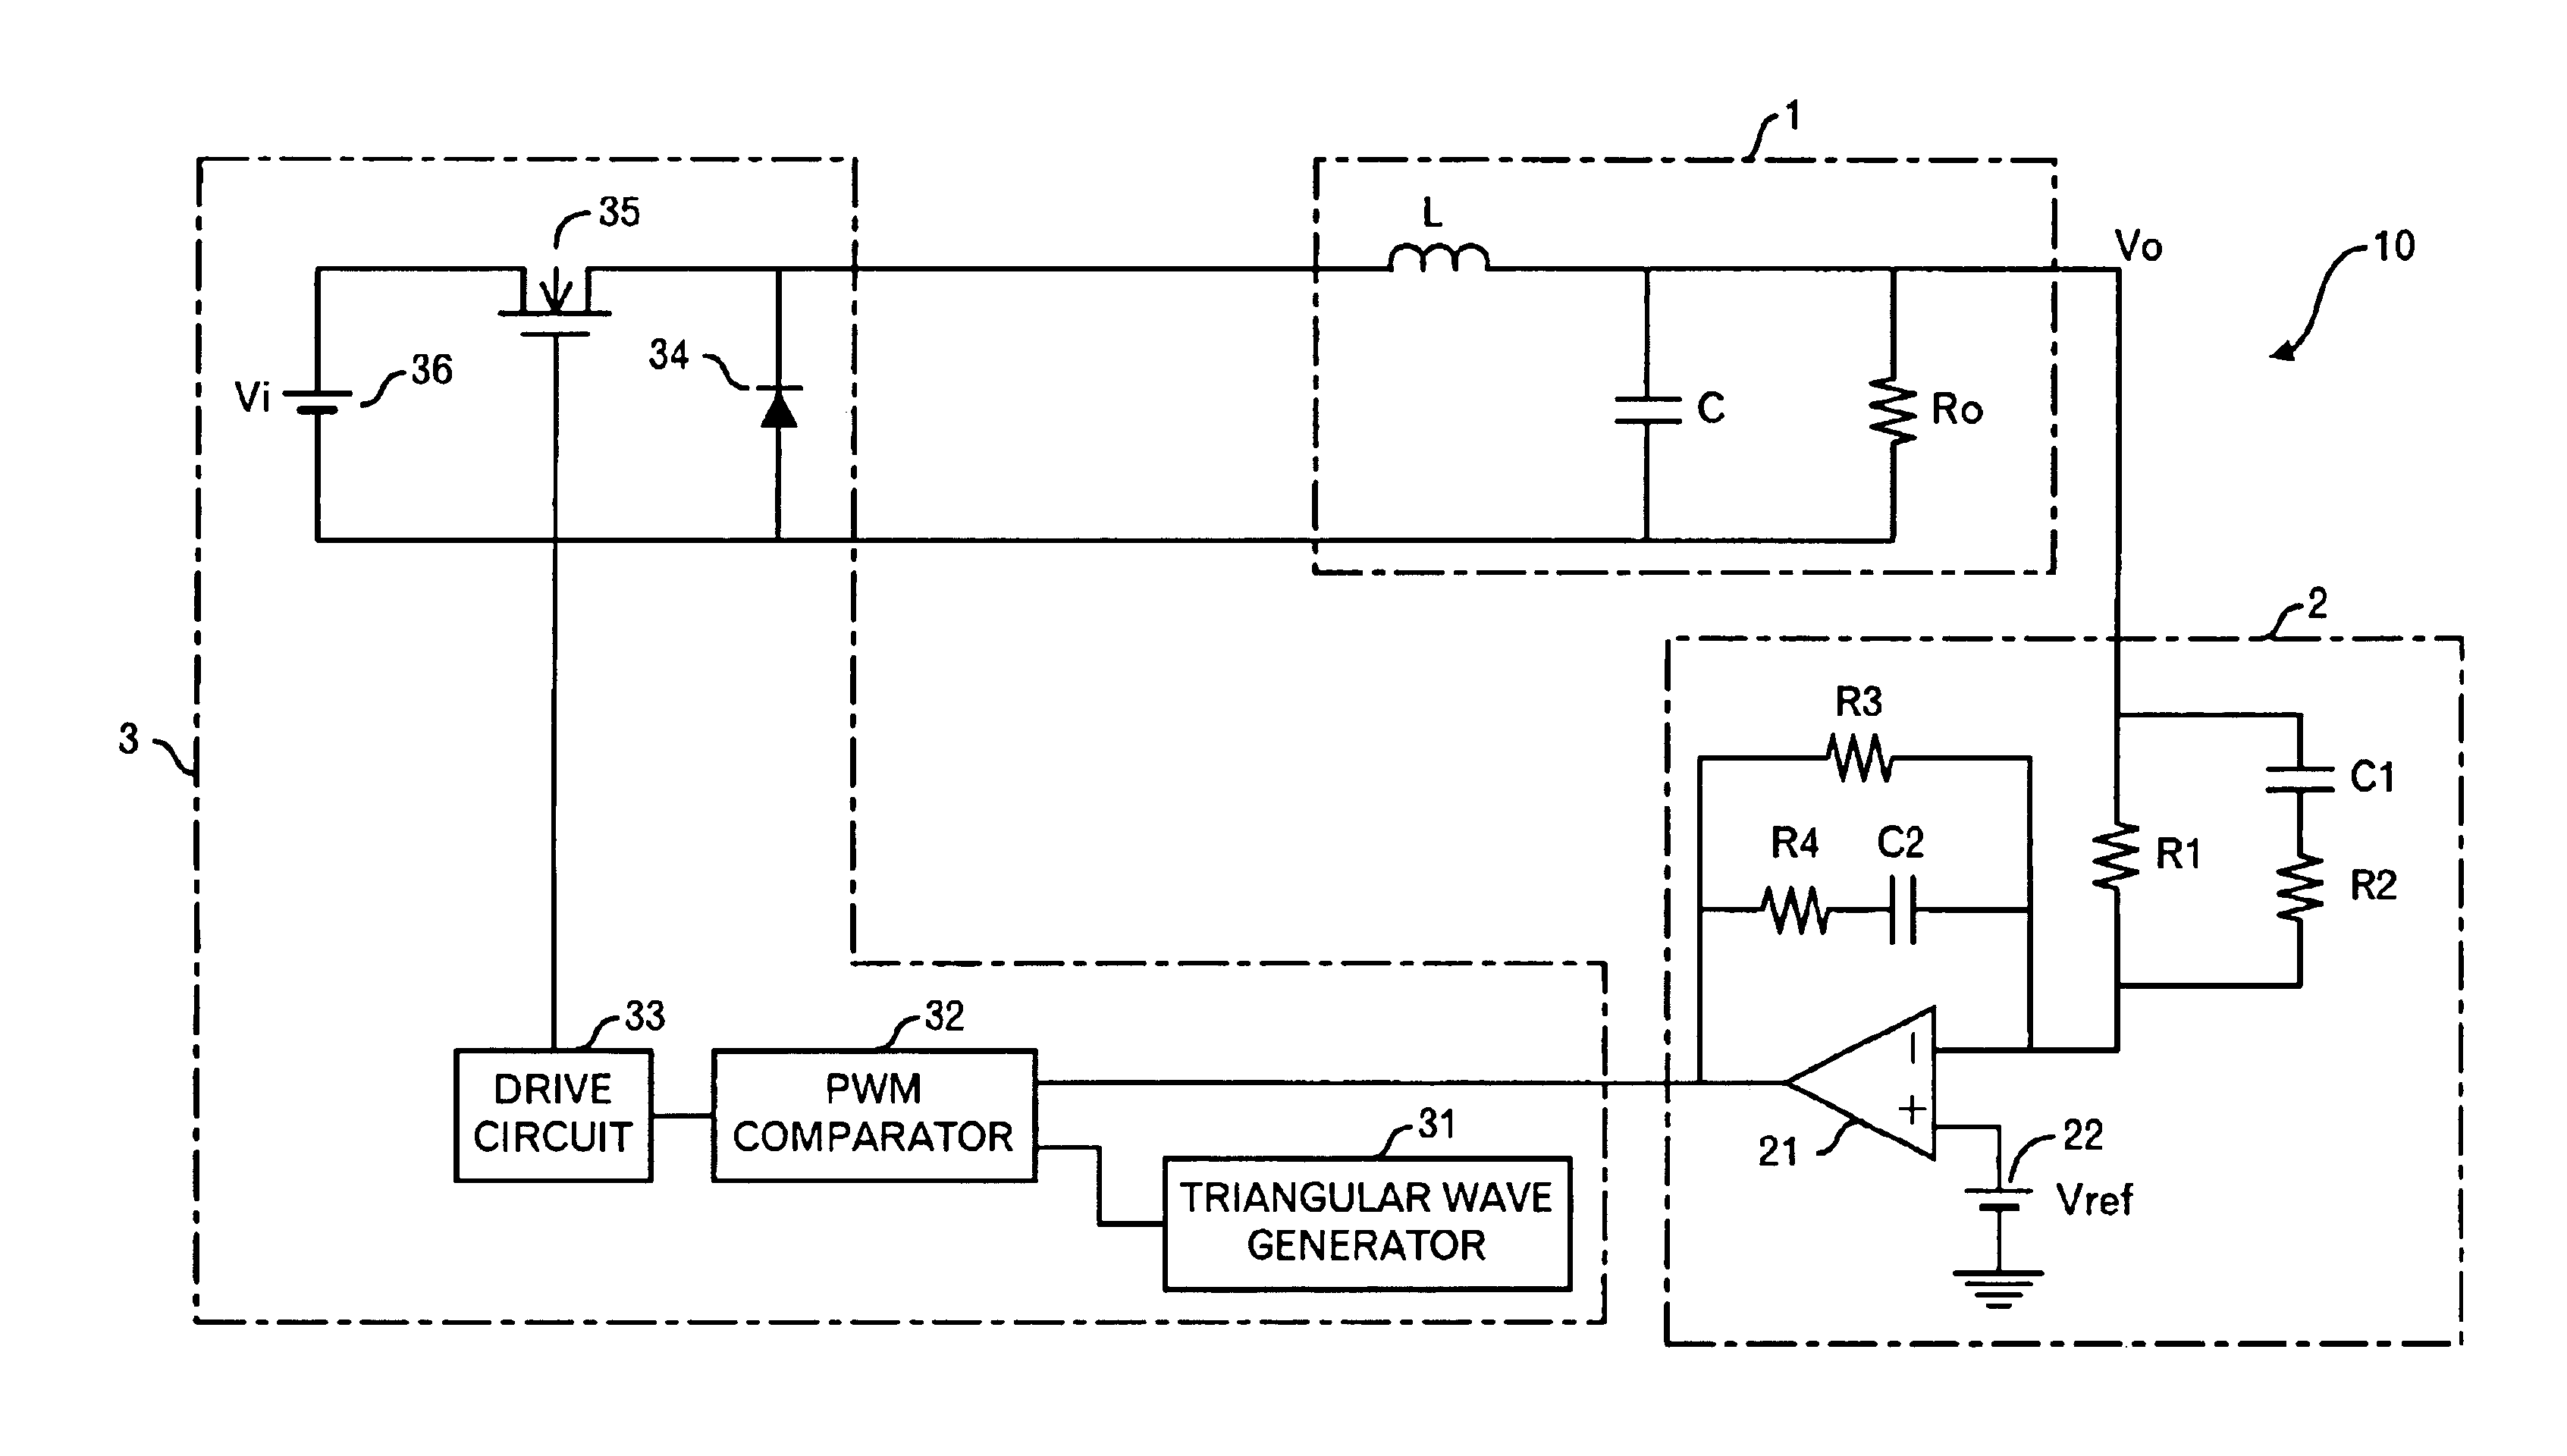 Power supply apparatus